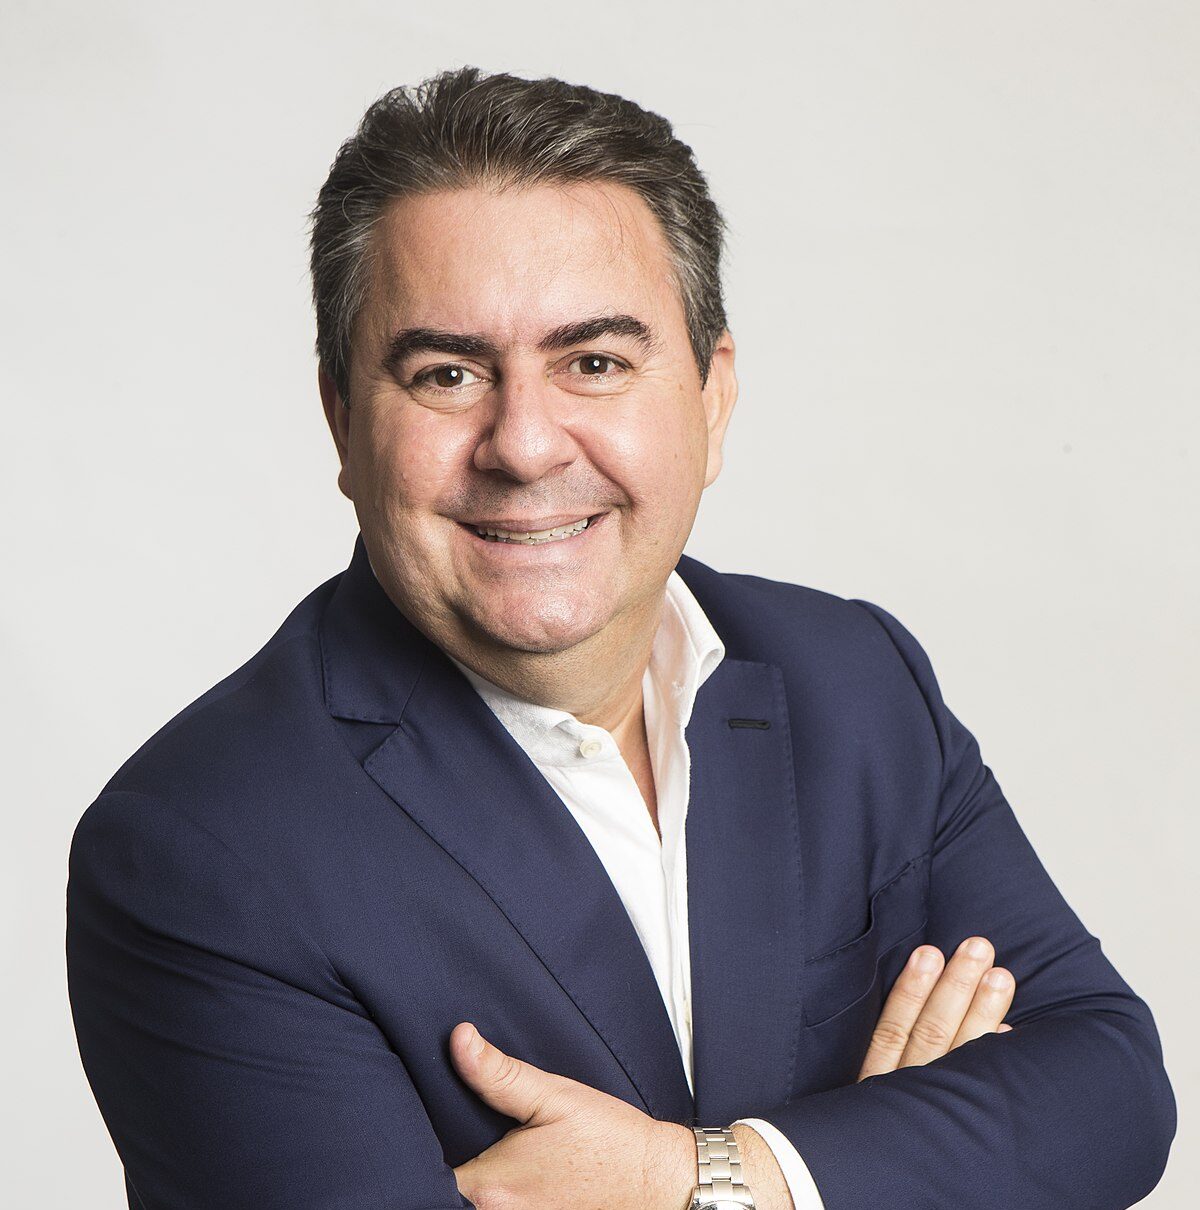 José Carlos Semenzato: dono de uma holding multimilionária de franquias